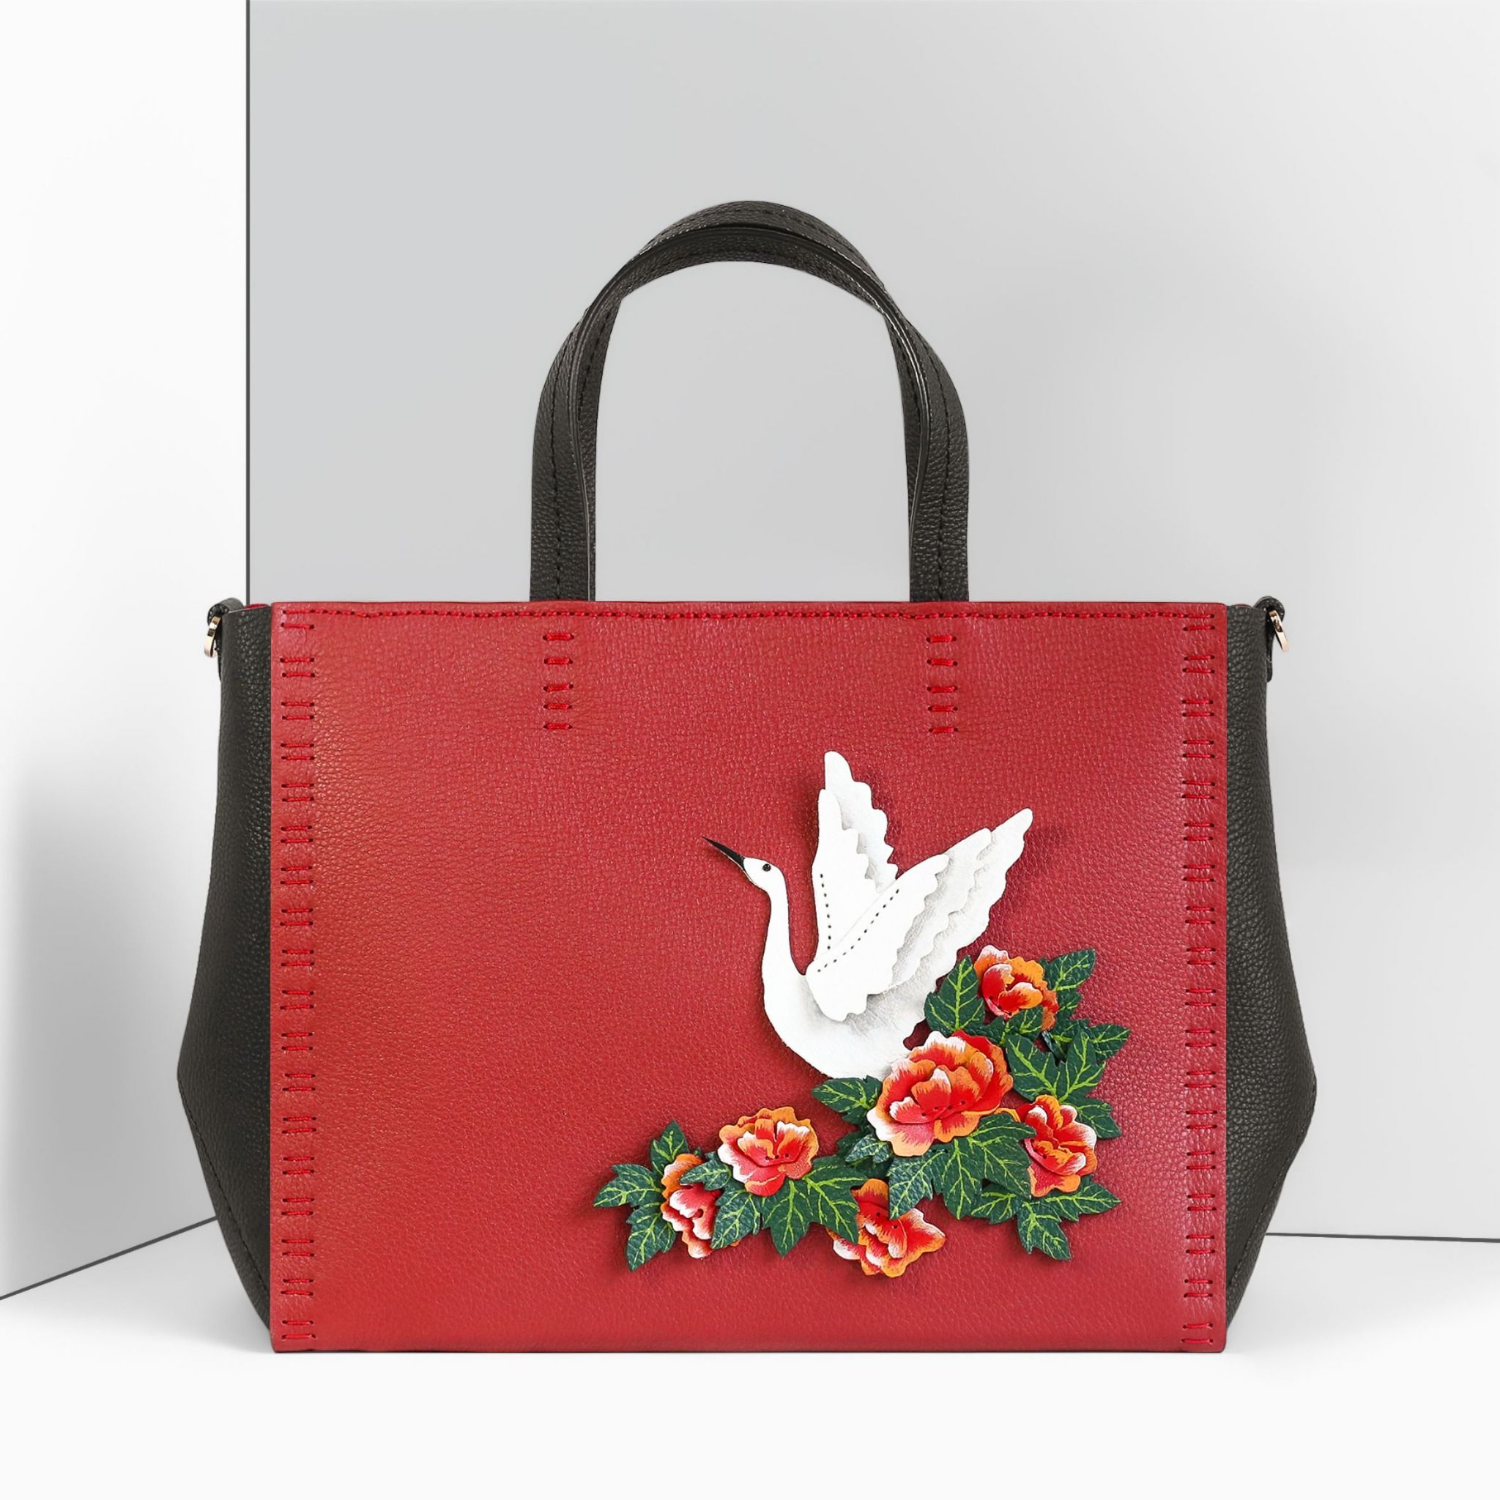 Handmade Charming Tote Bag